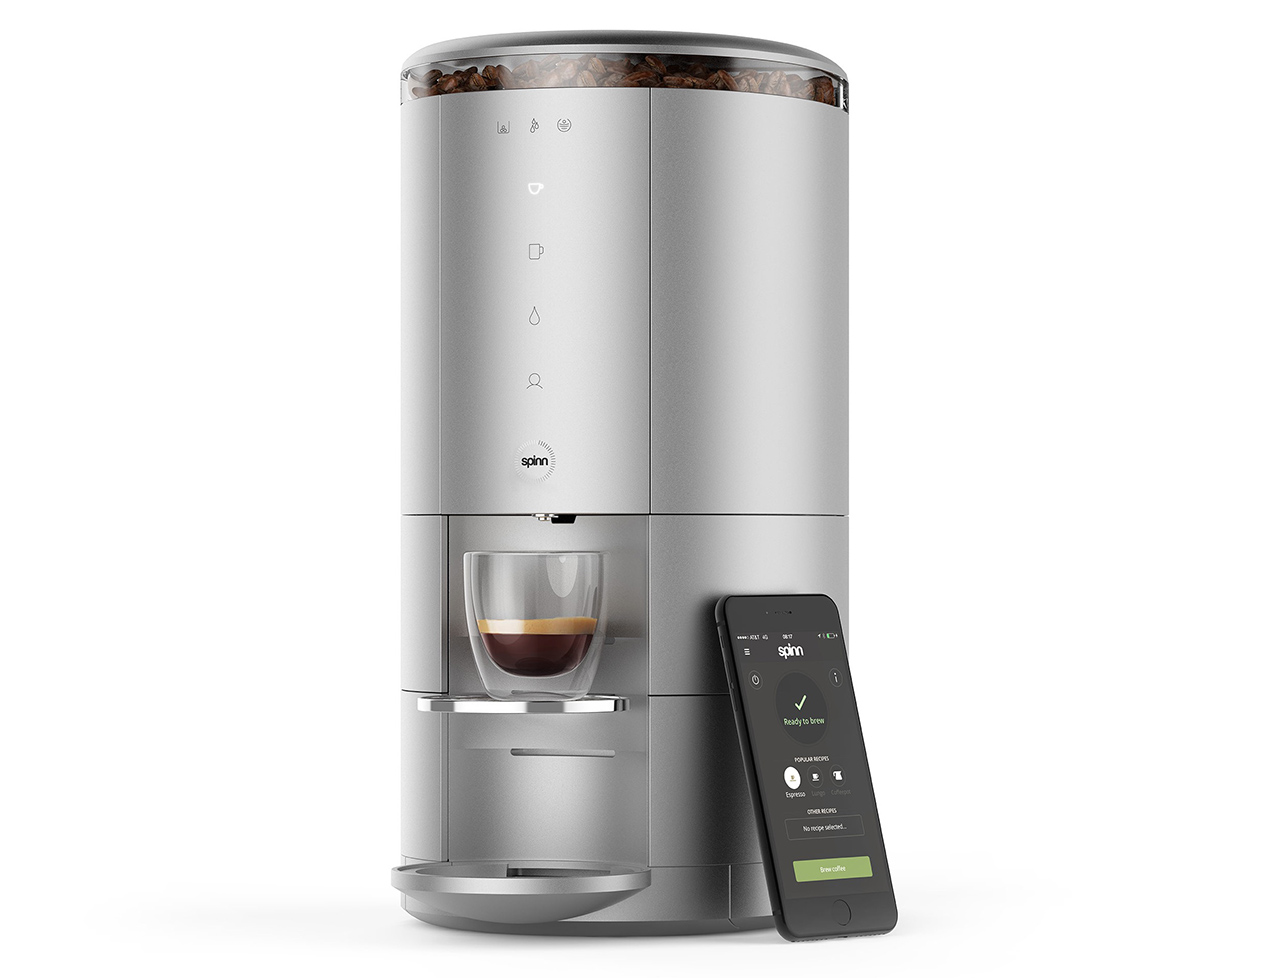 Spinn WiFi enabled coffee maker/espresso machine